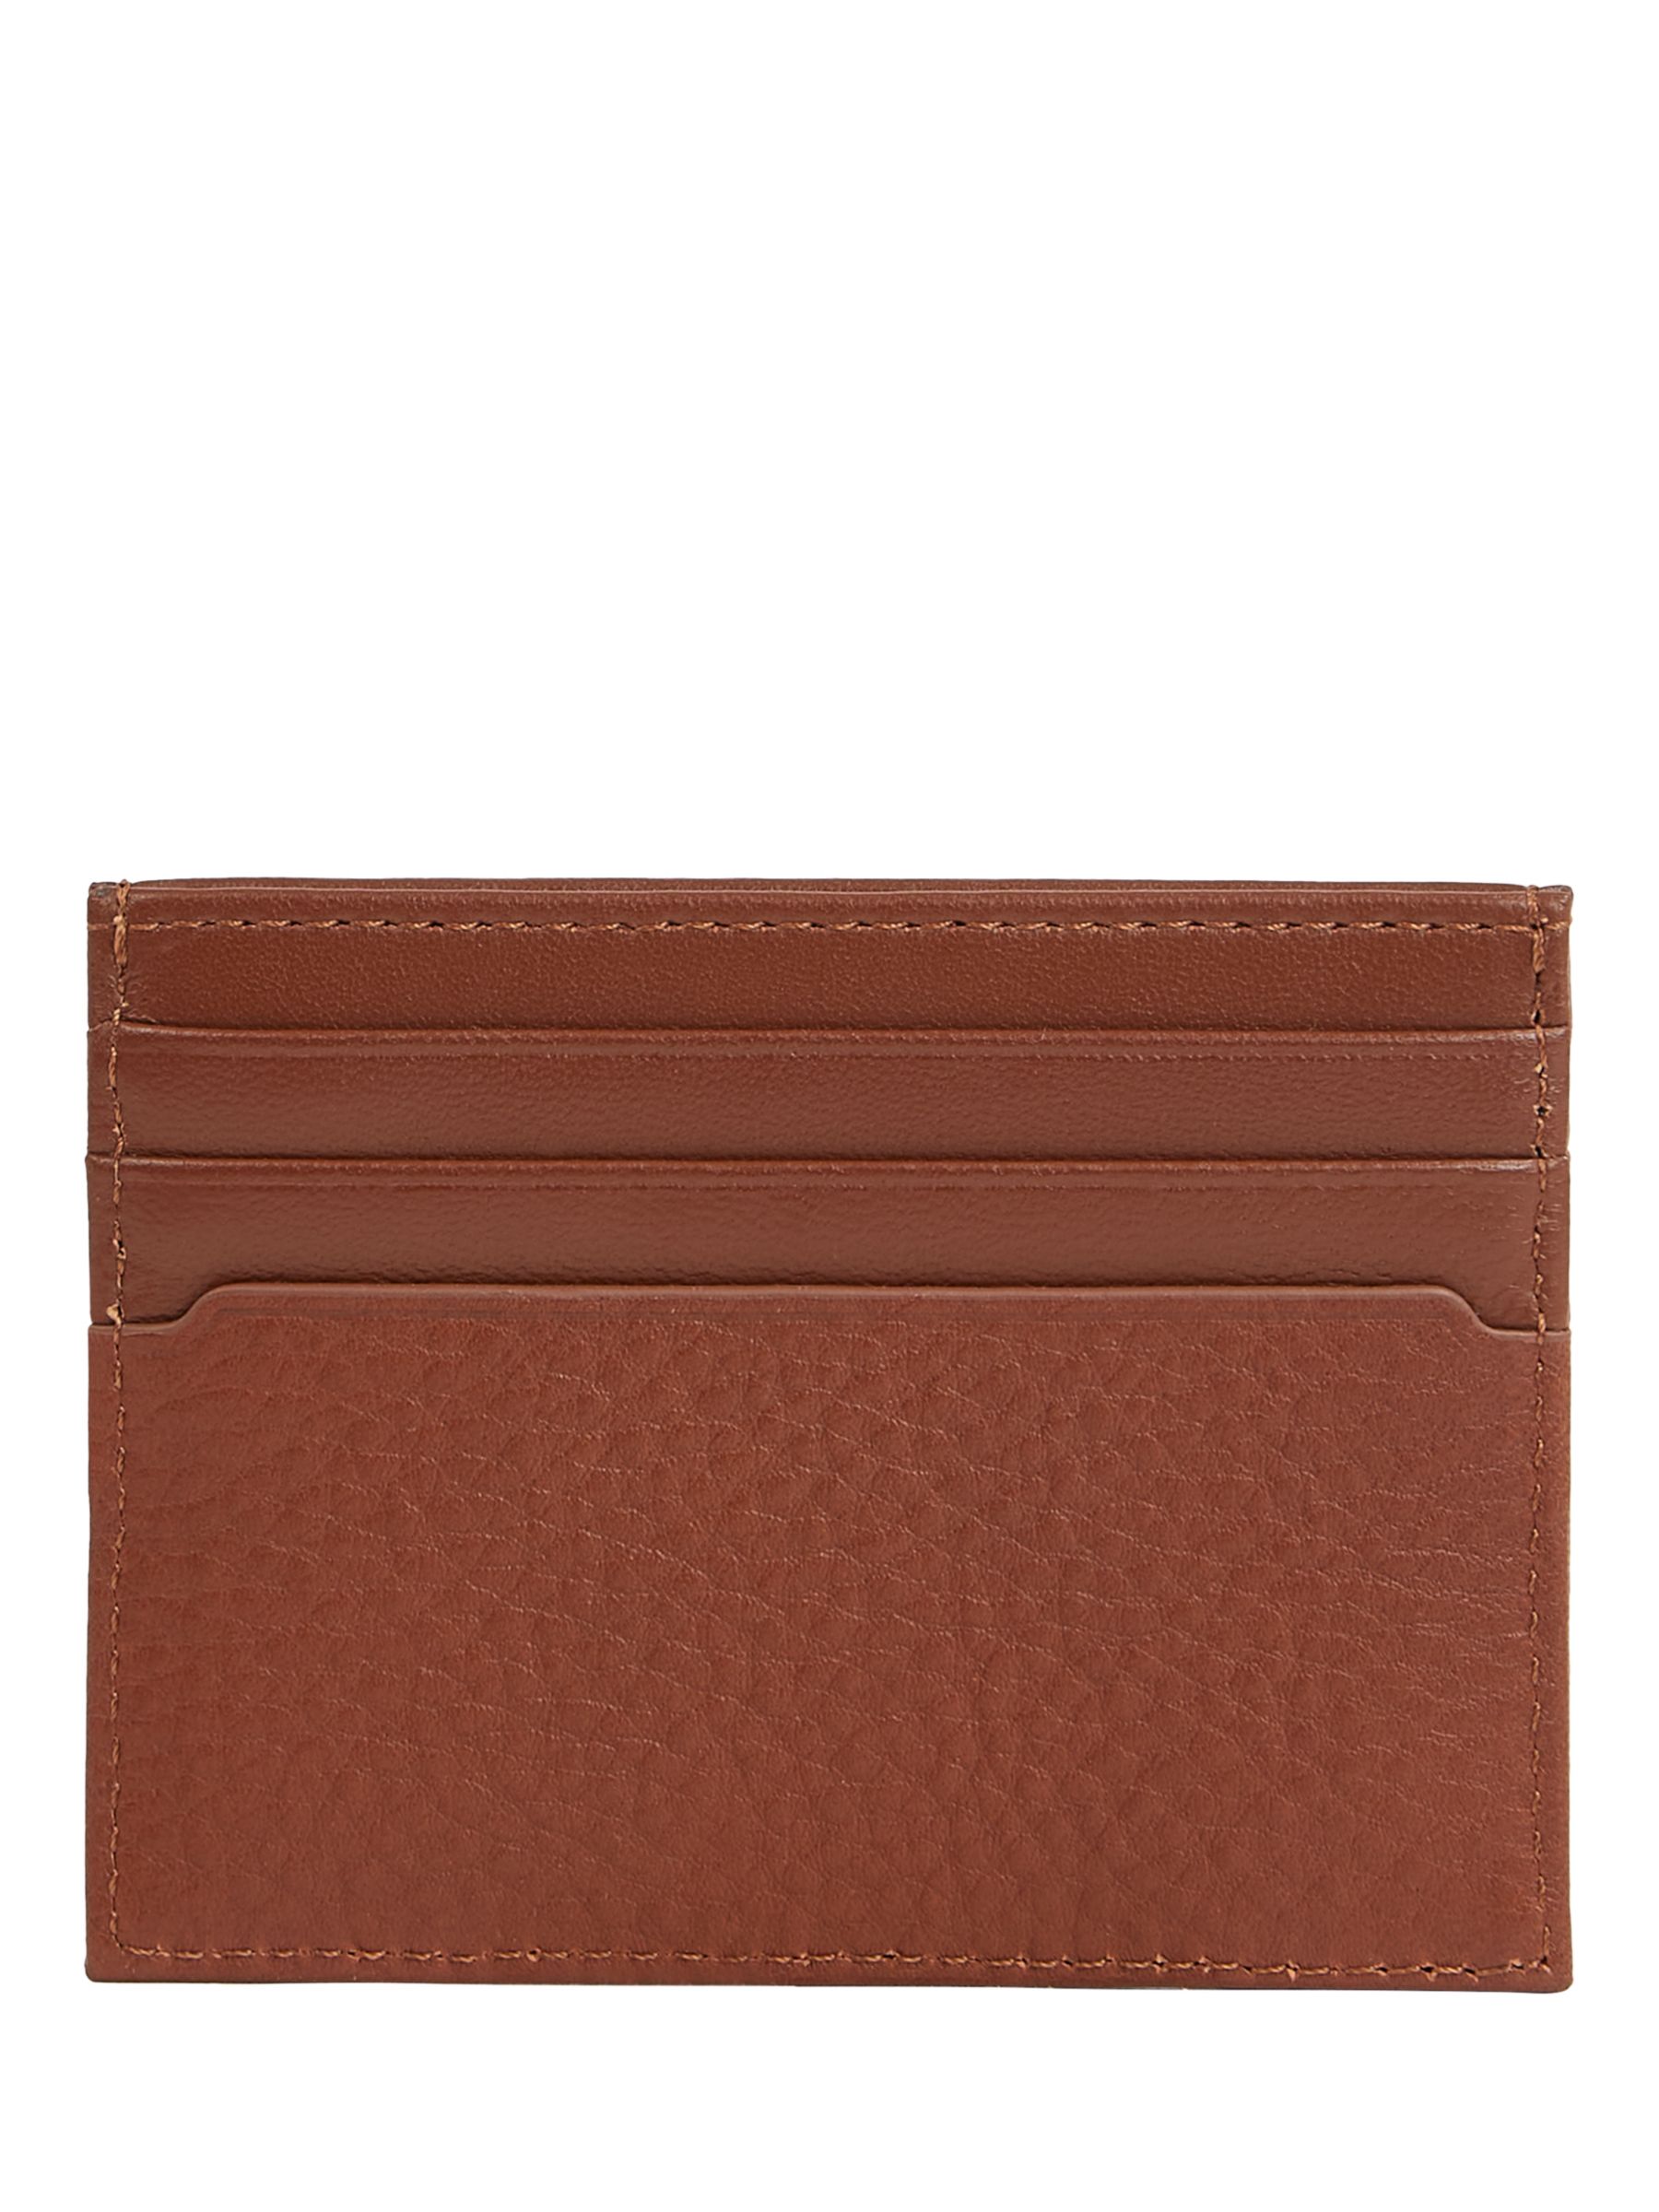 Buy Tommy Hilfiger Premium Leather Card Holder, Brown Dark Online at johnlewis.com